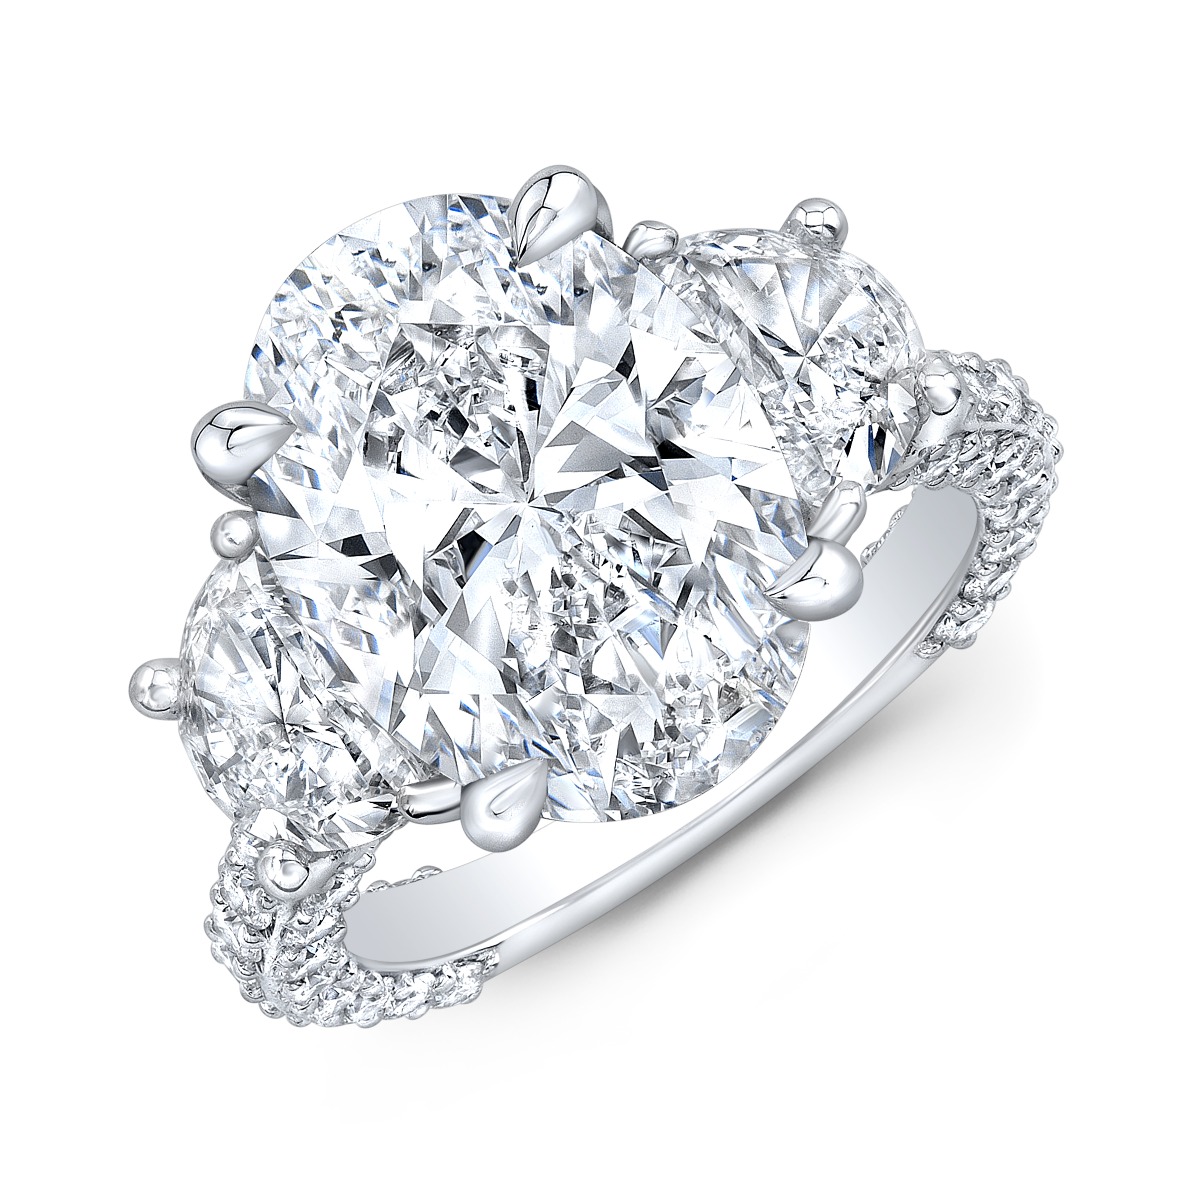 Share more than 158 3 stone halo diamond ring super hot